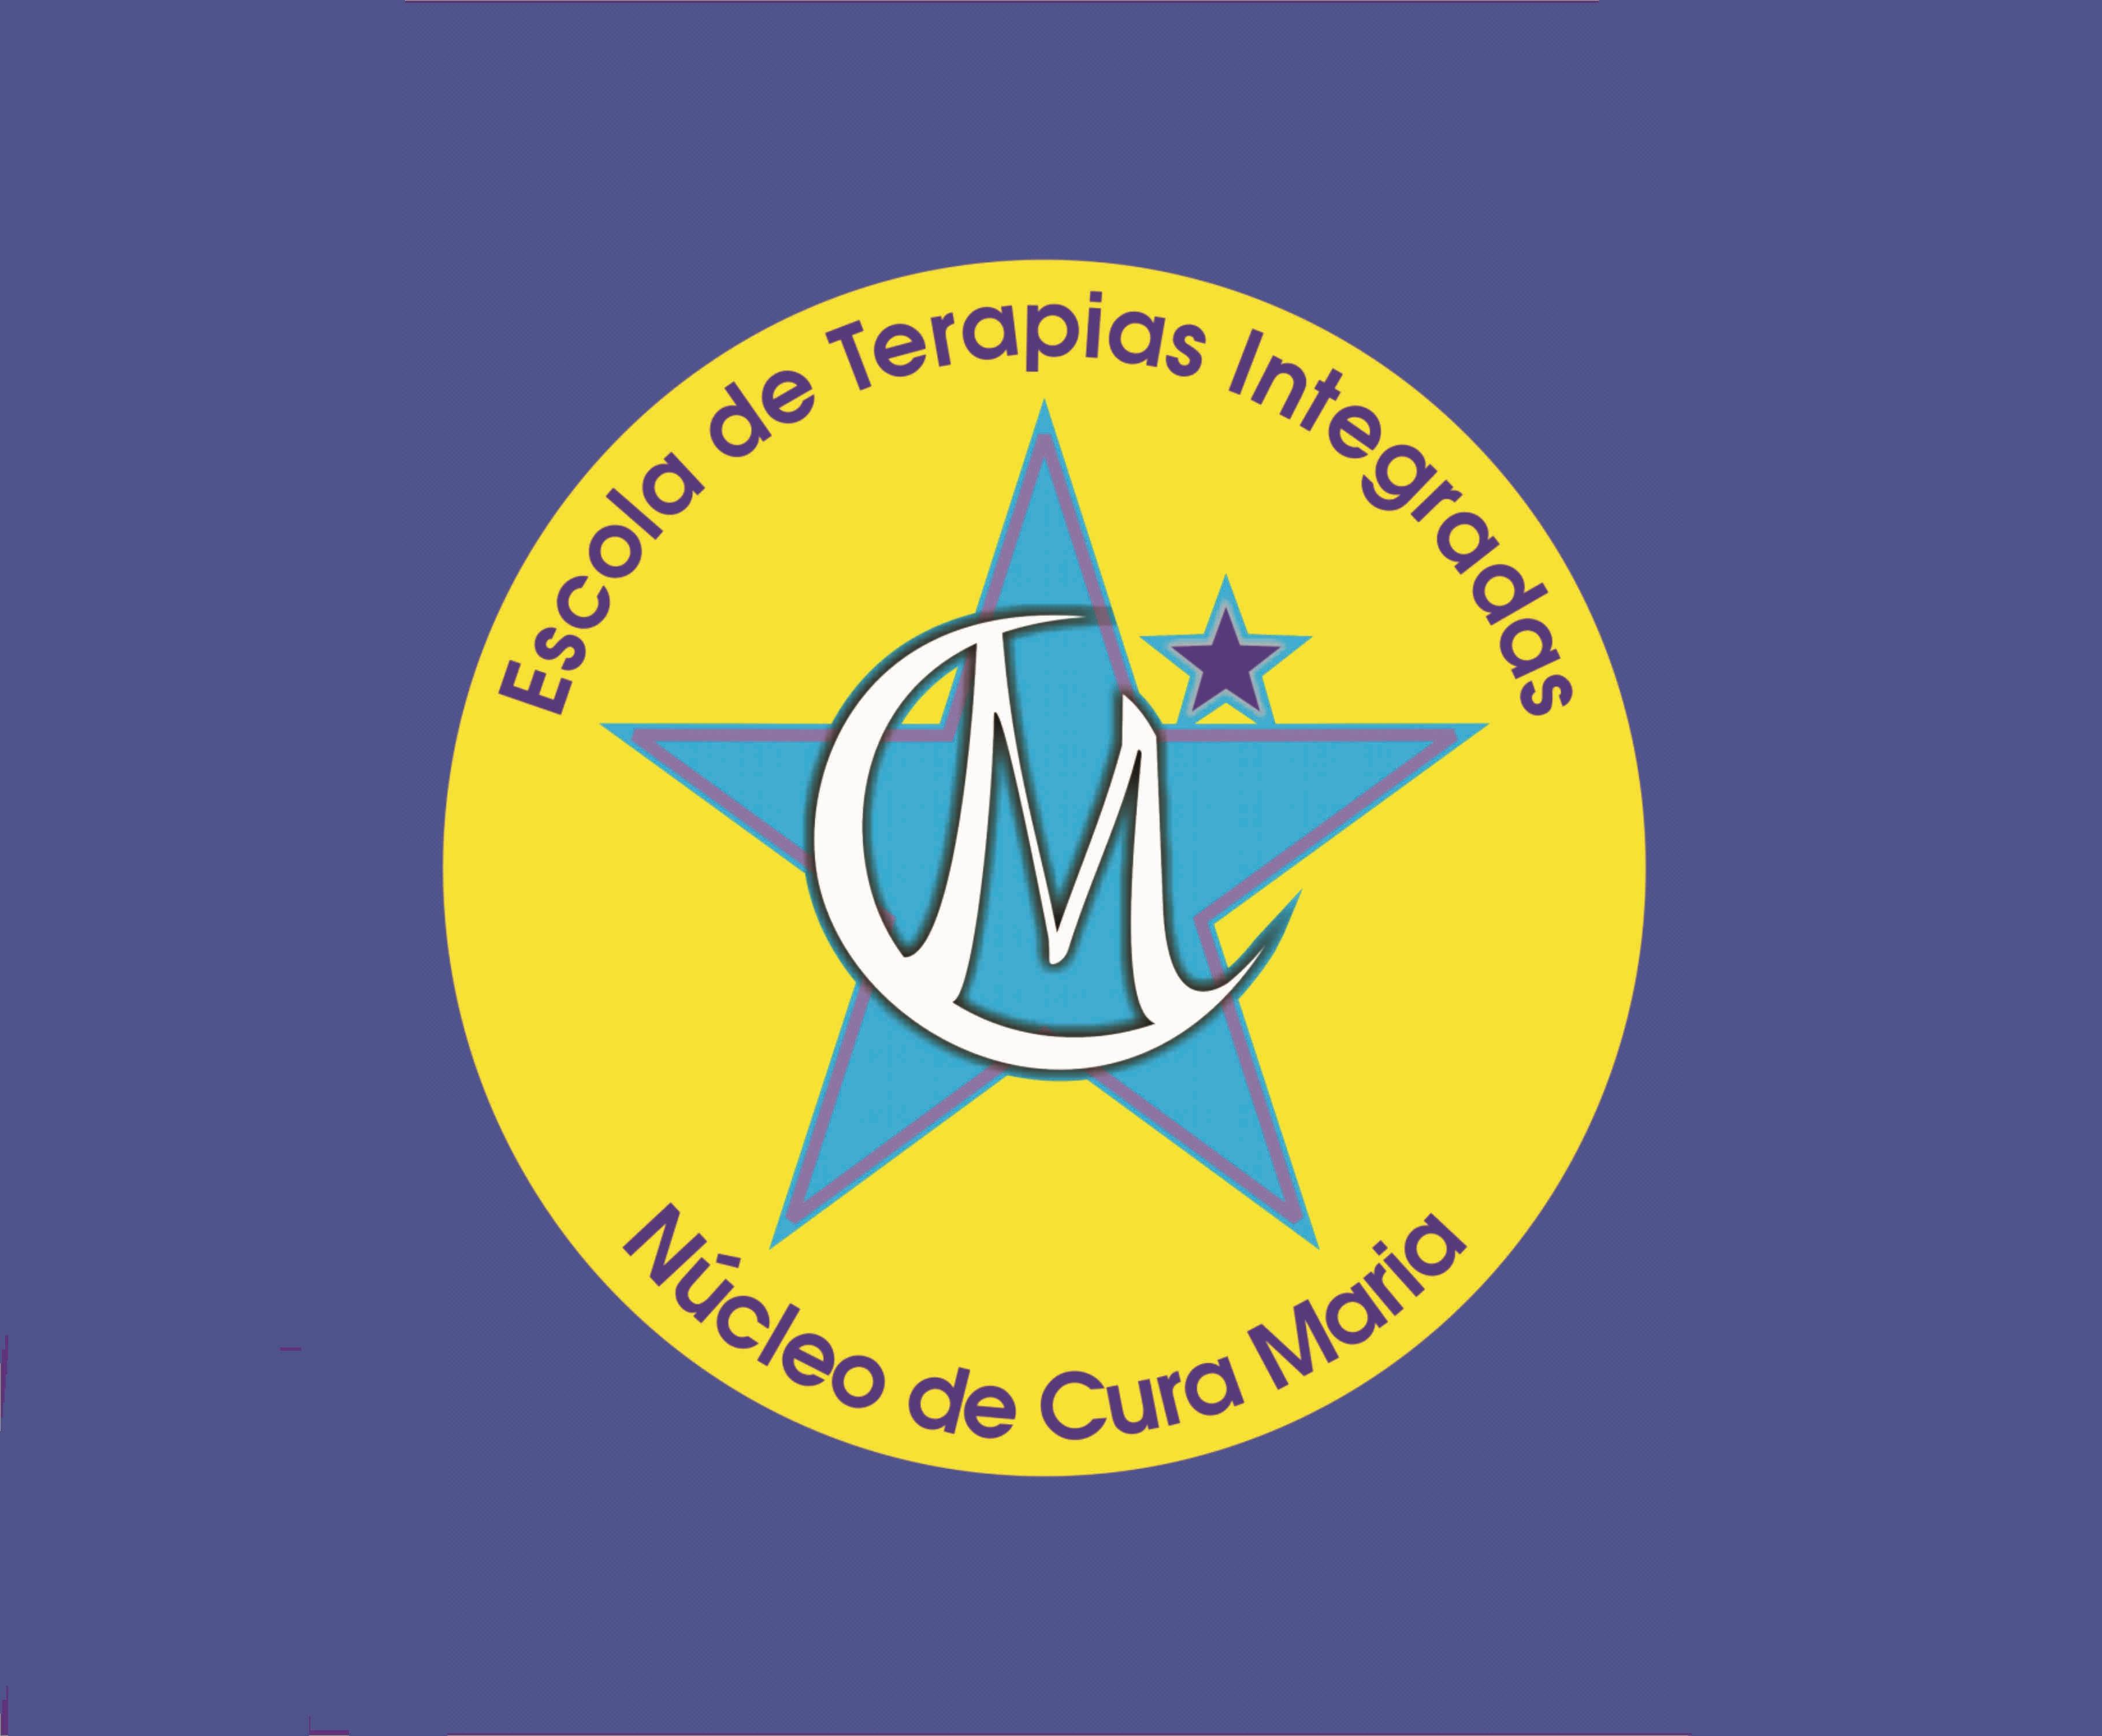 Escola de Terapias Integradas Núcleo de Cura Maria